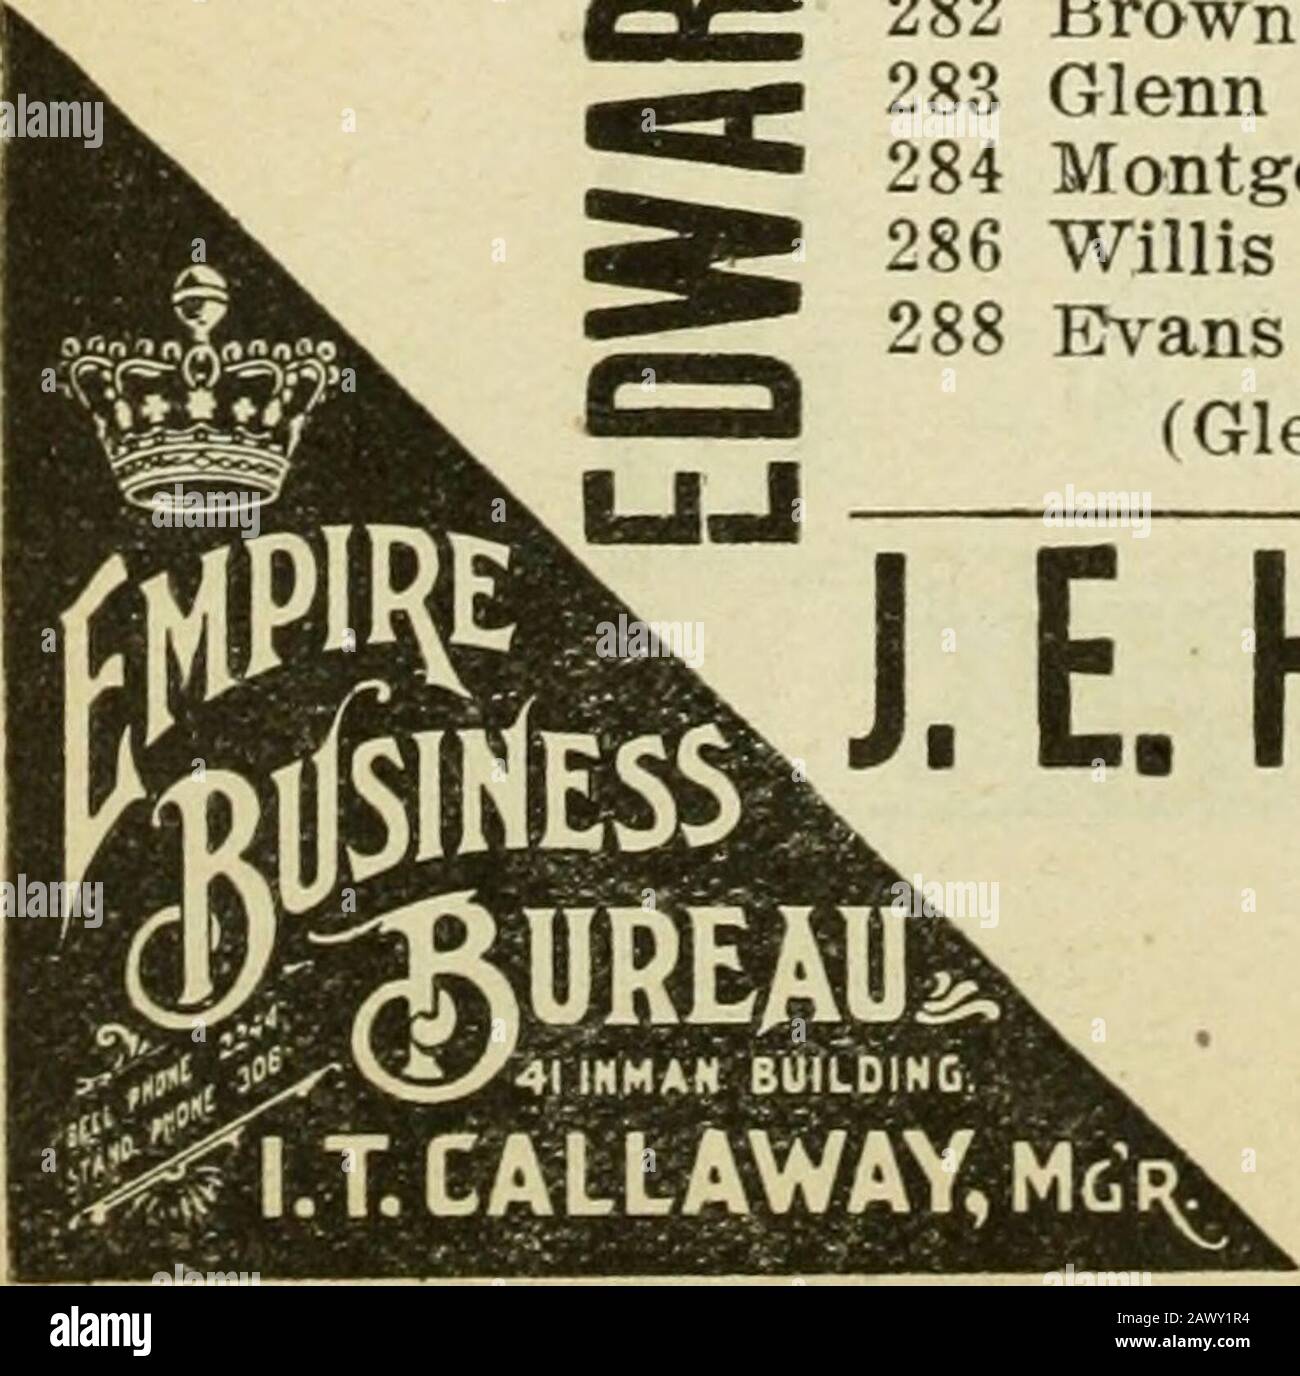 Répertoire D'Atlanta City . FRA A OO NM.L.CCILBEWSON. ^/ii OWENS JOHISON,i/ /^ers A tr&gt;€Asf »^GIA TII-E. .CO ^,r.s^//,sifo^HEIX^A.GOIV CEMjELIMTT TUILE House chauffage SYSTÈME D'AIR CHAUD, le test jn The Market.187, avenue Edgewood téléphone 1891 &o FRA (174) FRA JO Ul CO. FRASER—Contd. 199 White John T 200 Nelson Emma (c)202 Jenkins Mildred (c)204 Mitchell William (cj206 Flood Thomas (c)208 Alexander Lewis (c)210 Gilliard Joseph (c)212 Terry Daniel (c) 214 McWhorter Richard (c) (Richardson intersects)216 Webb John (c)220 Gleeson Mary Mrs224 Lee Lucius L (c) 228 Jones (c Banque D'Images